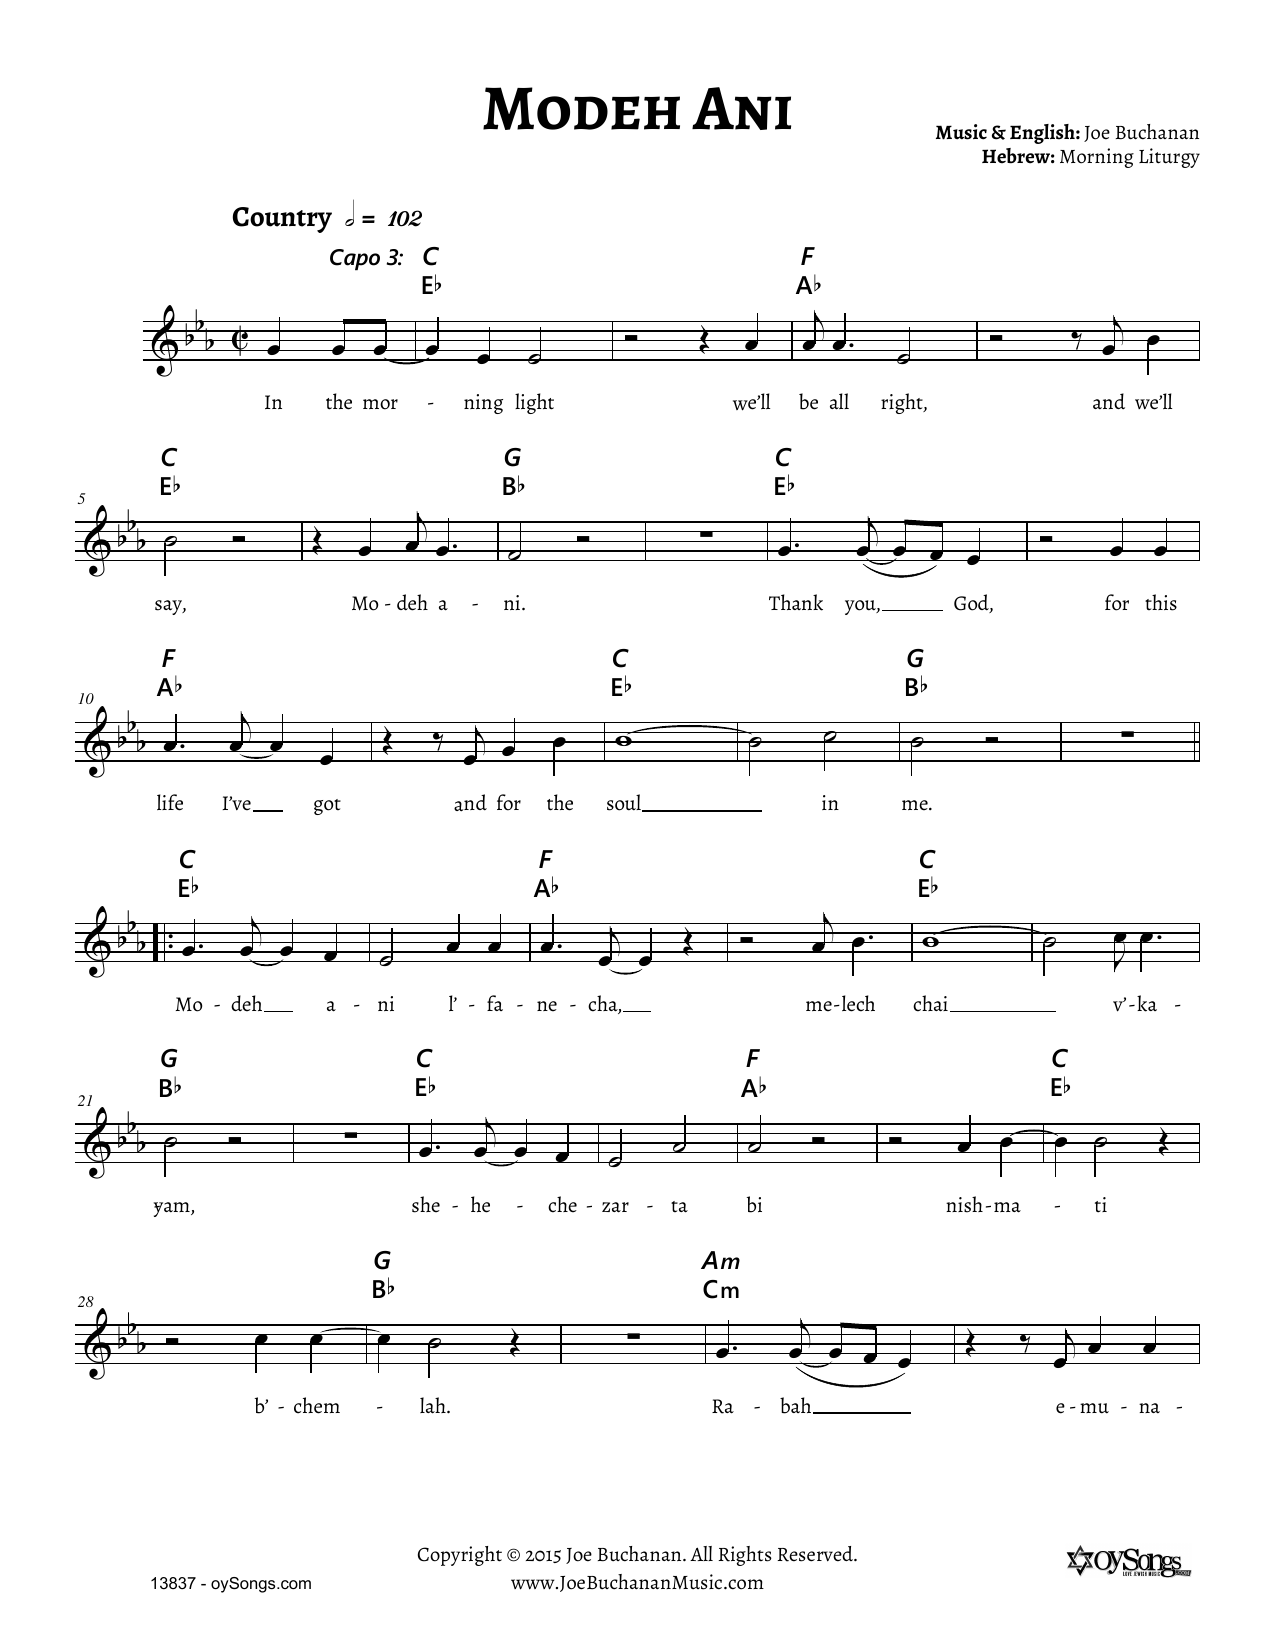 Joe Buchanan Modeh Ani sheet music notes and chords arranged for Lead Sheet / Fake Book